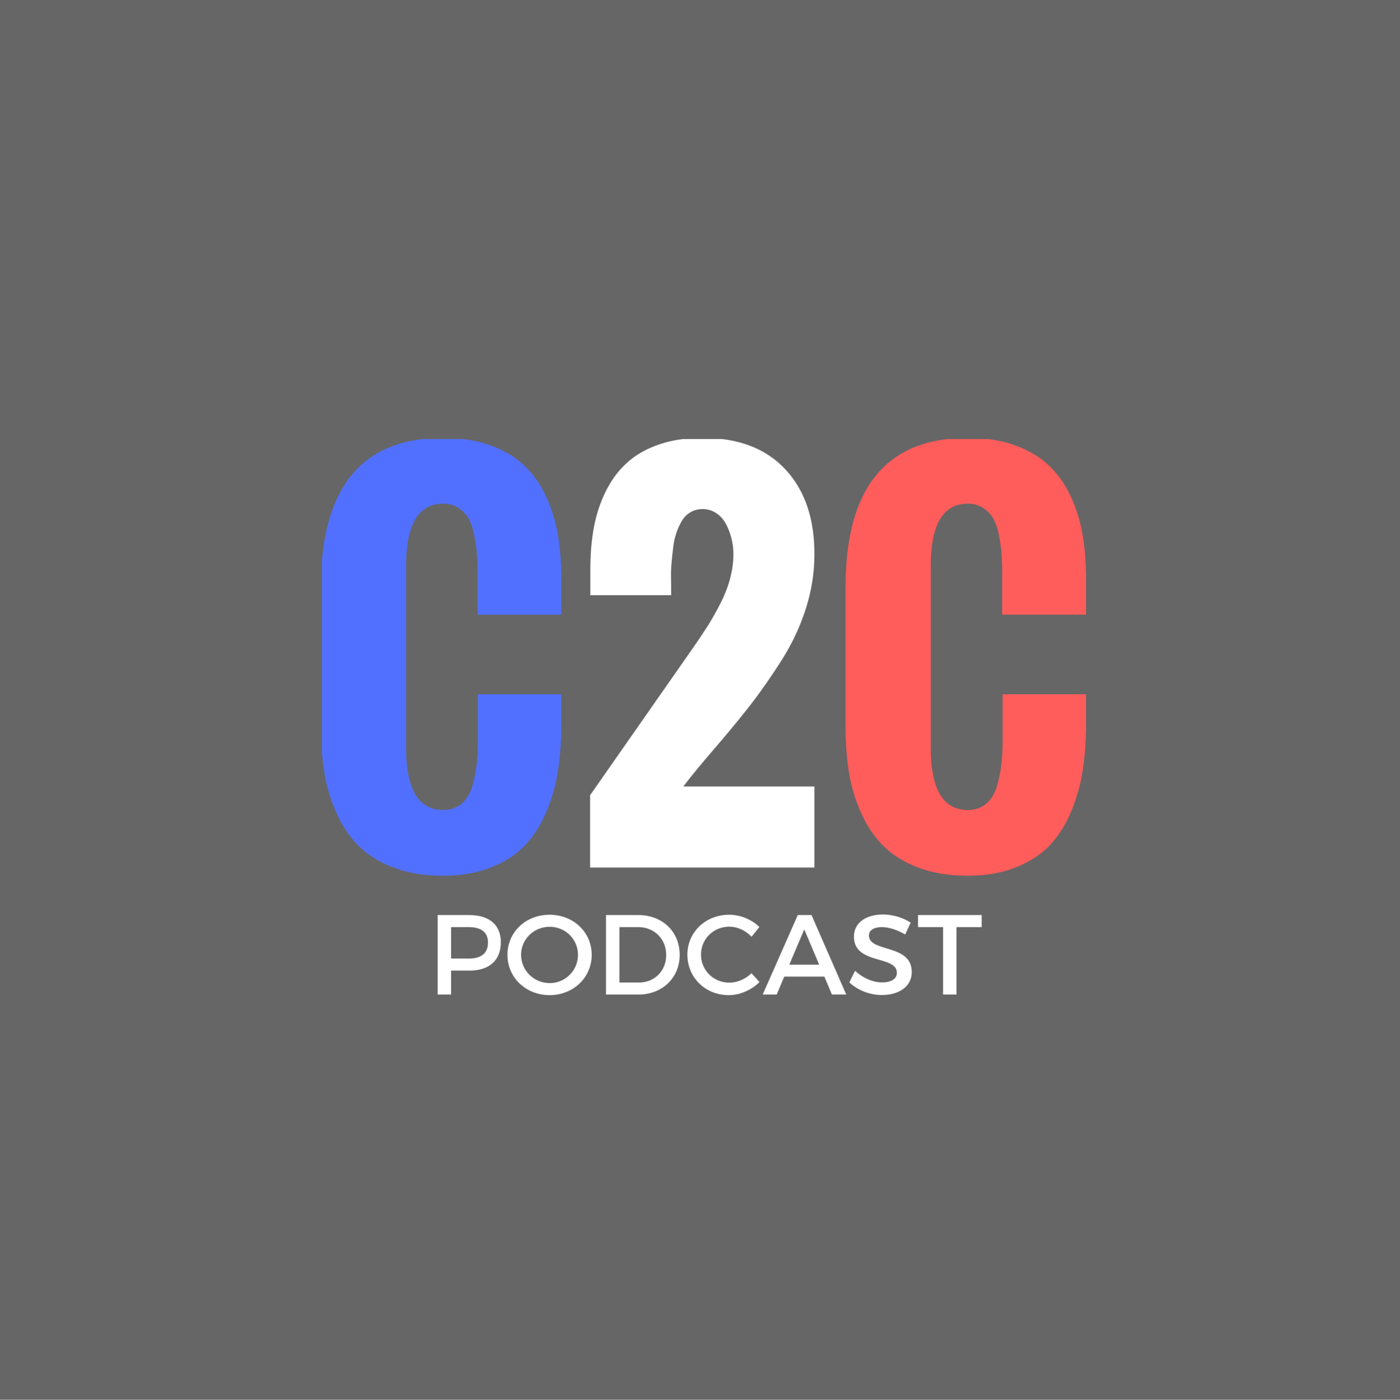 Coast 2 Coast Podcast Episode #29: NBA Finals Preview